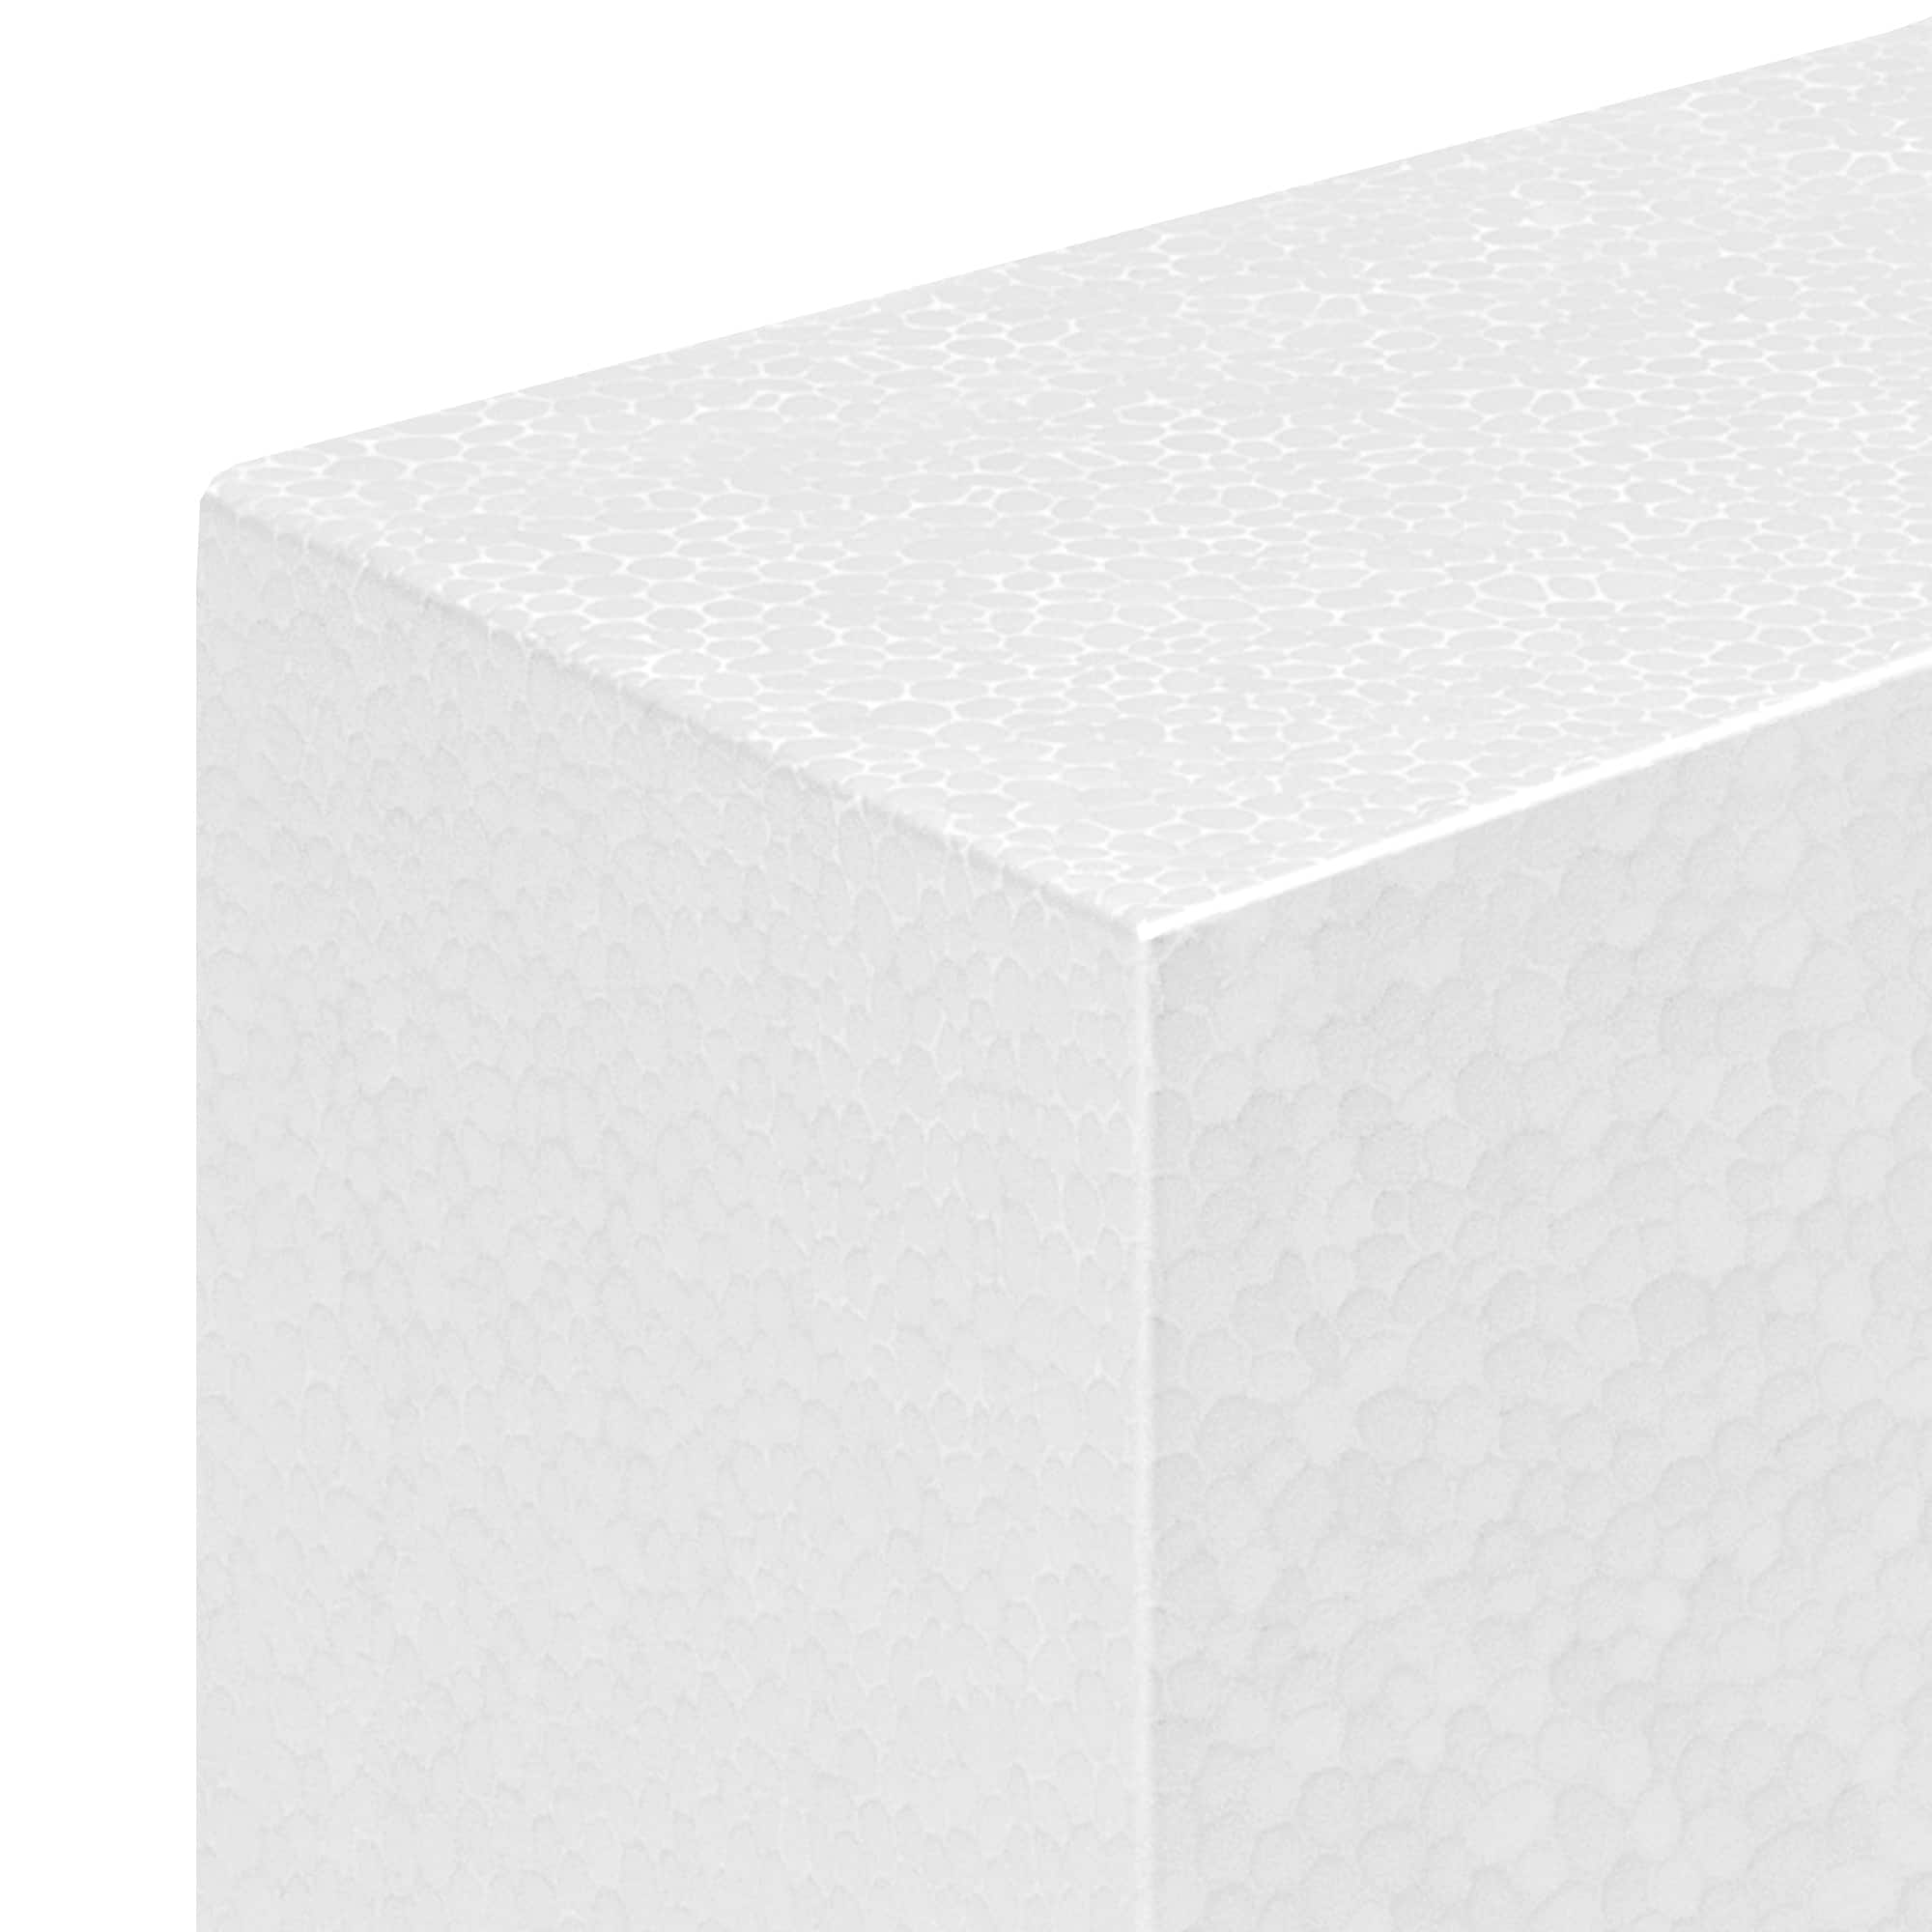 White Foam Block by Ashland®